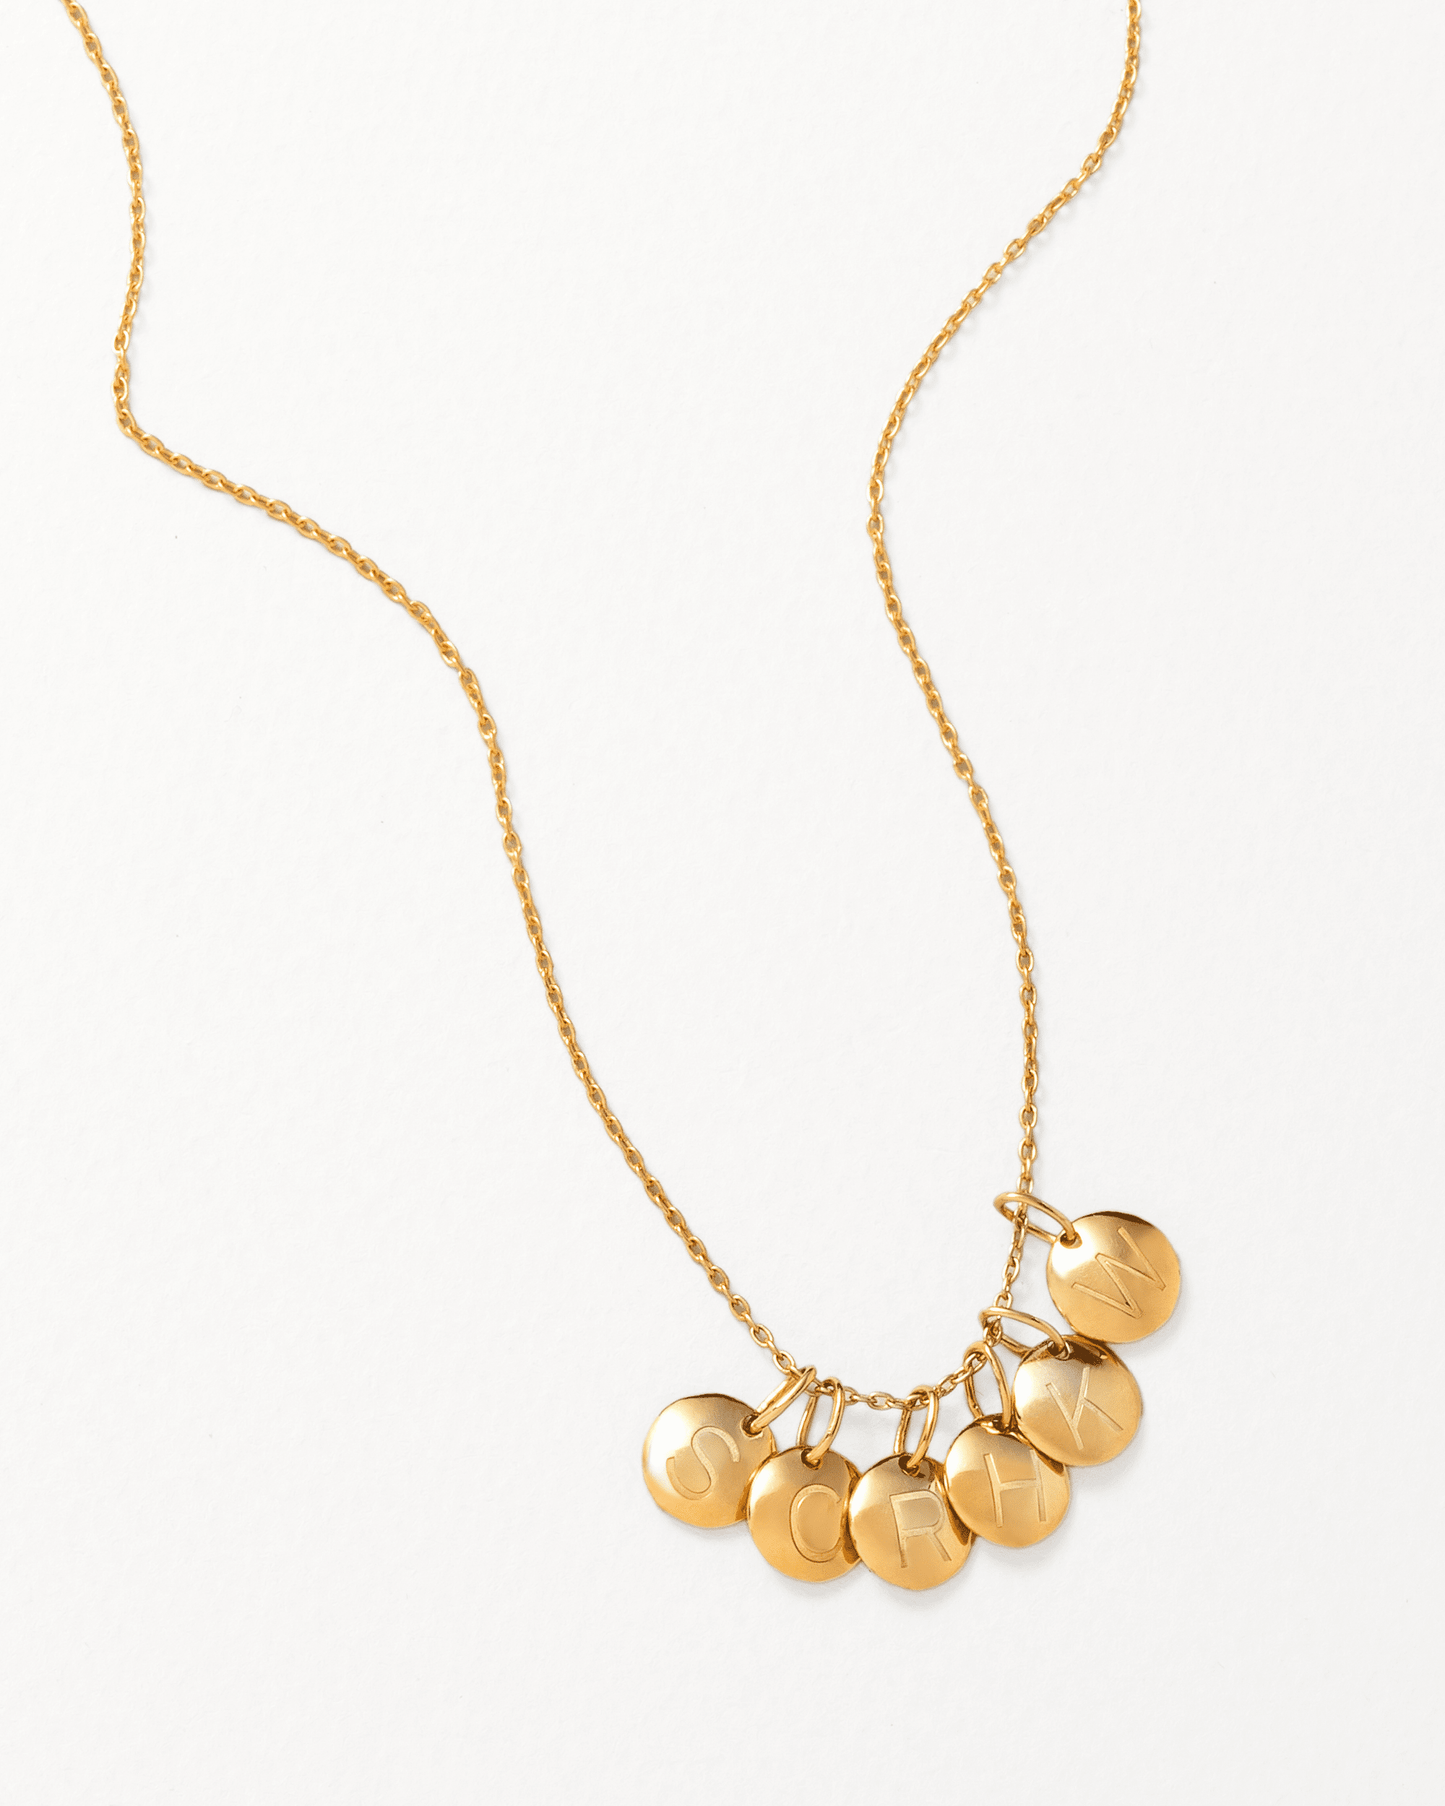 Birthstone Charm Necklace - 18K Gold Vermeil Necklaces magal-dev 